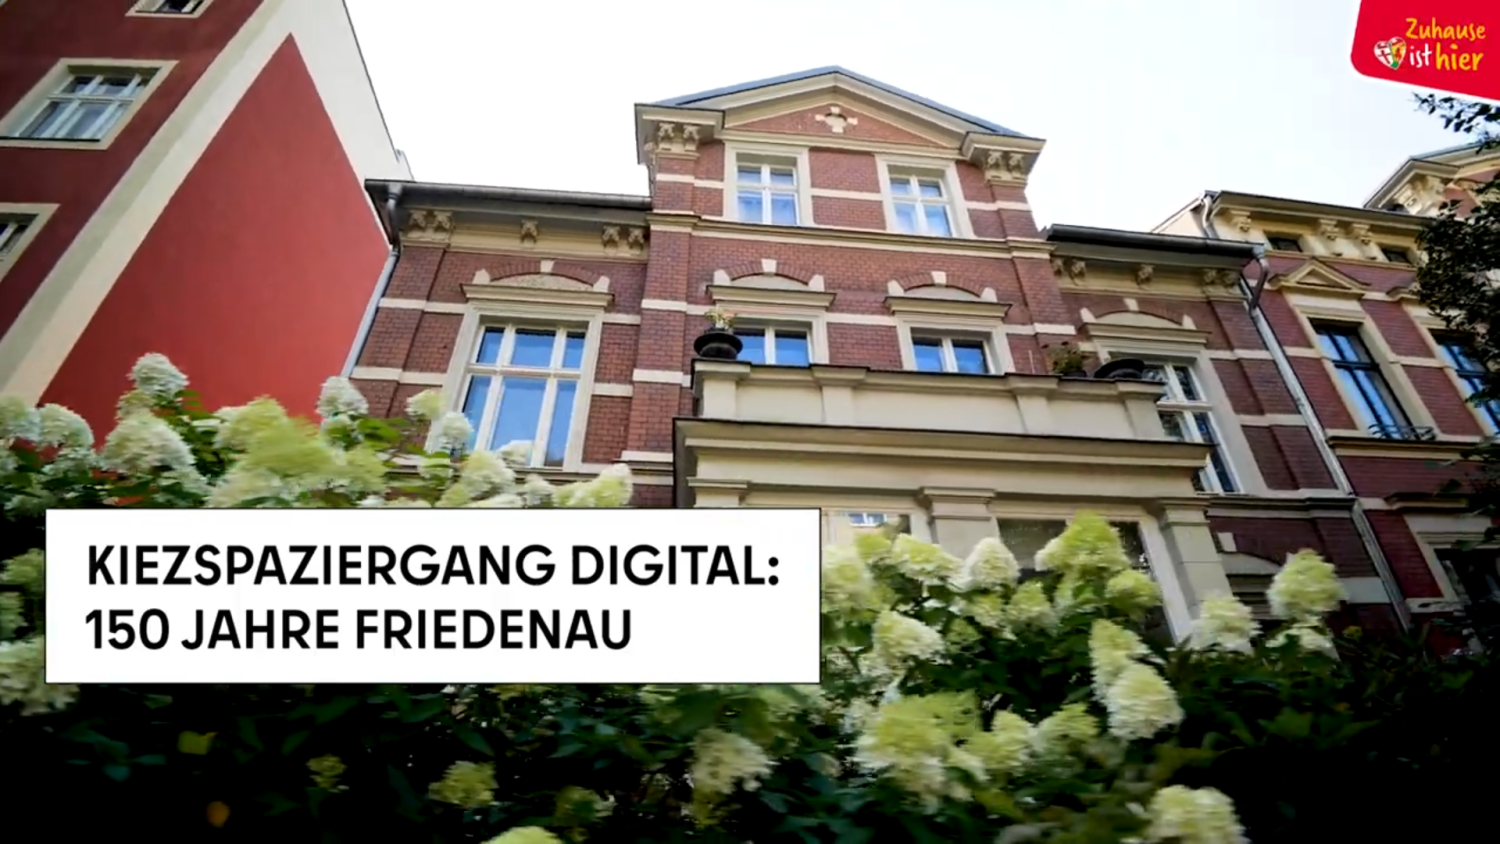 Ein altes Haus, Textfeld "Kiezspaziergang digital 150 Jahre Friedenau"